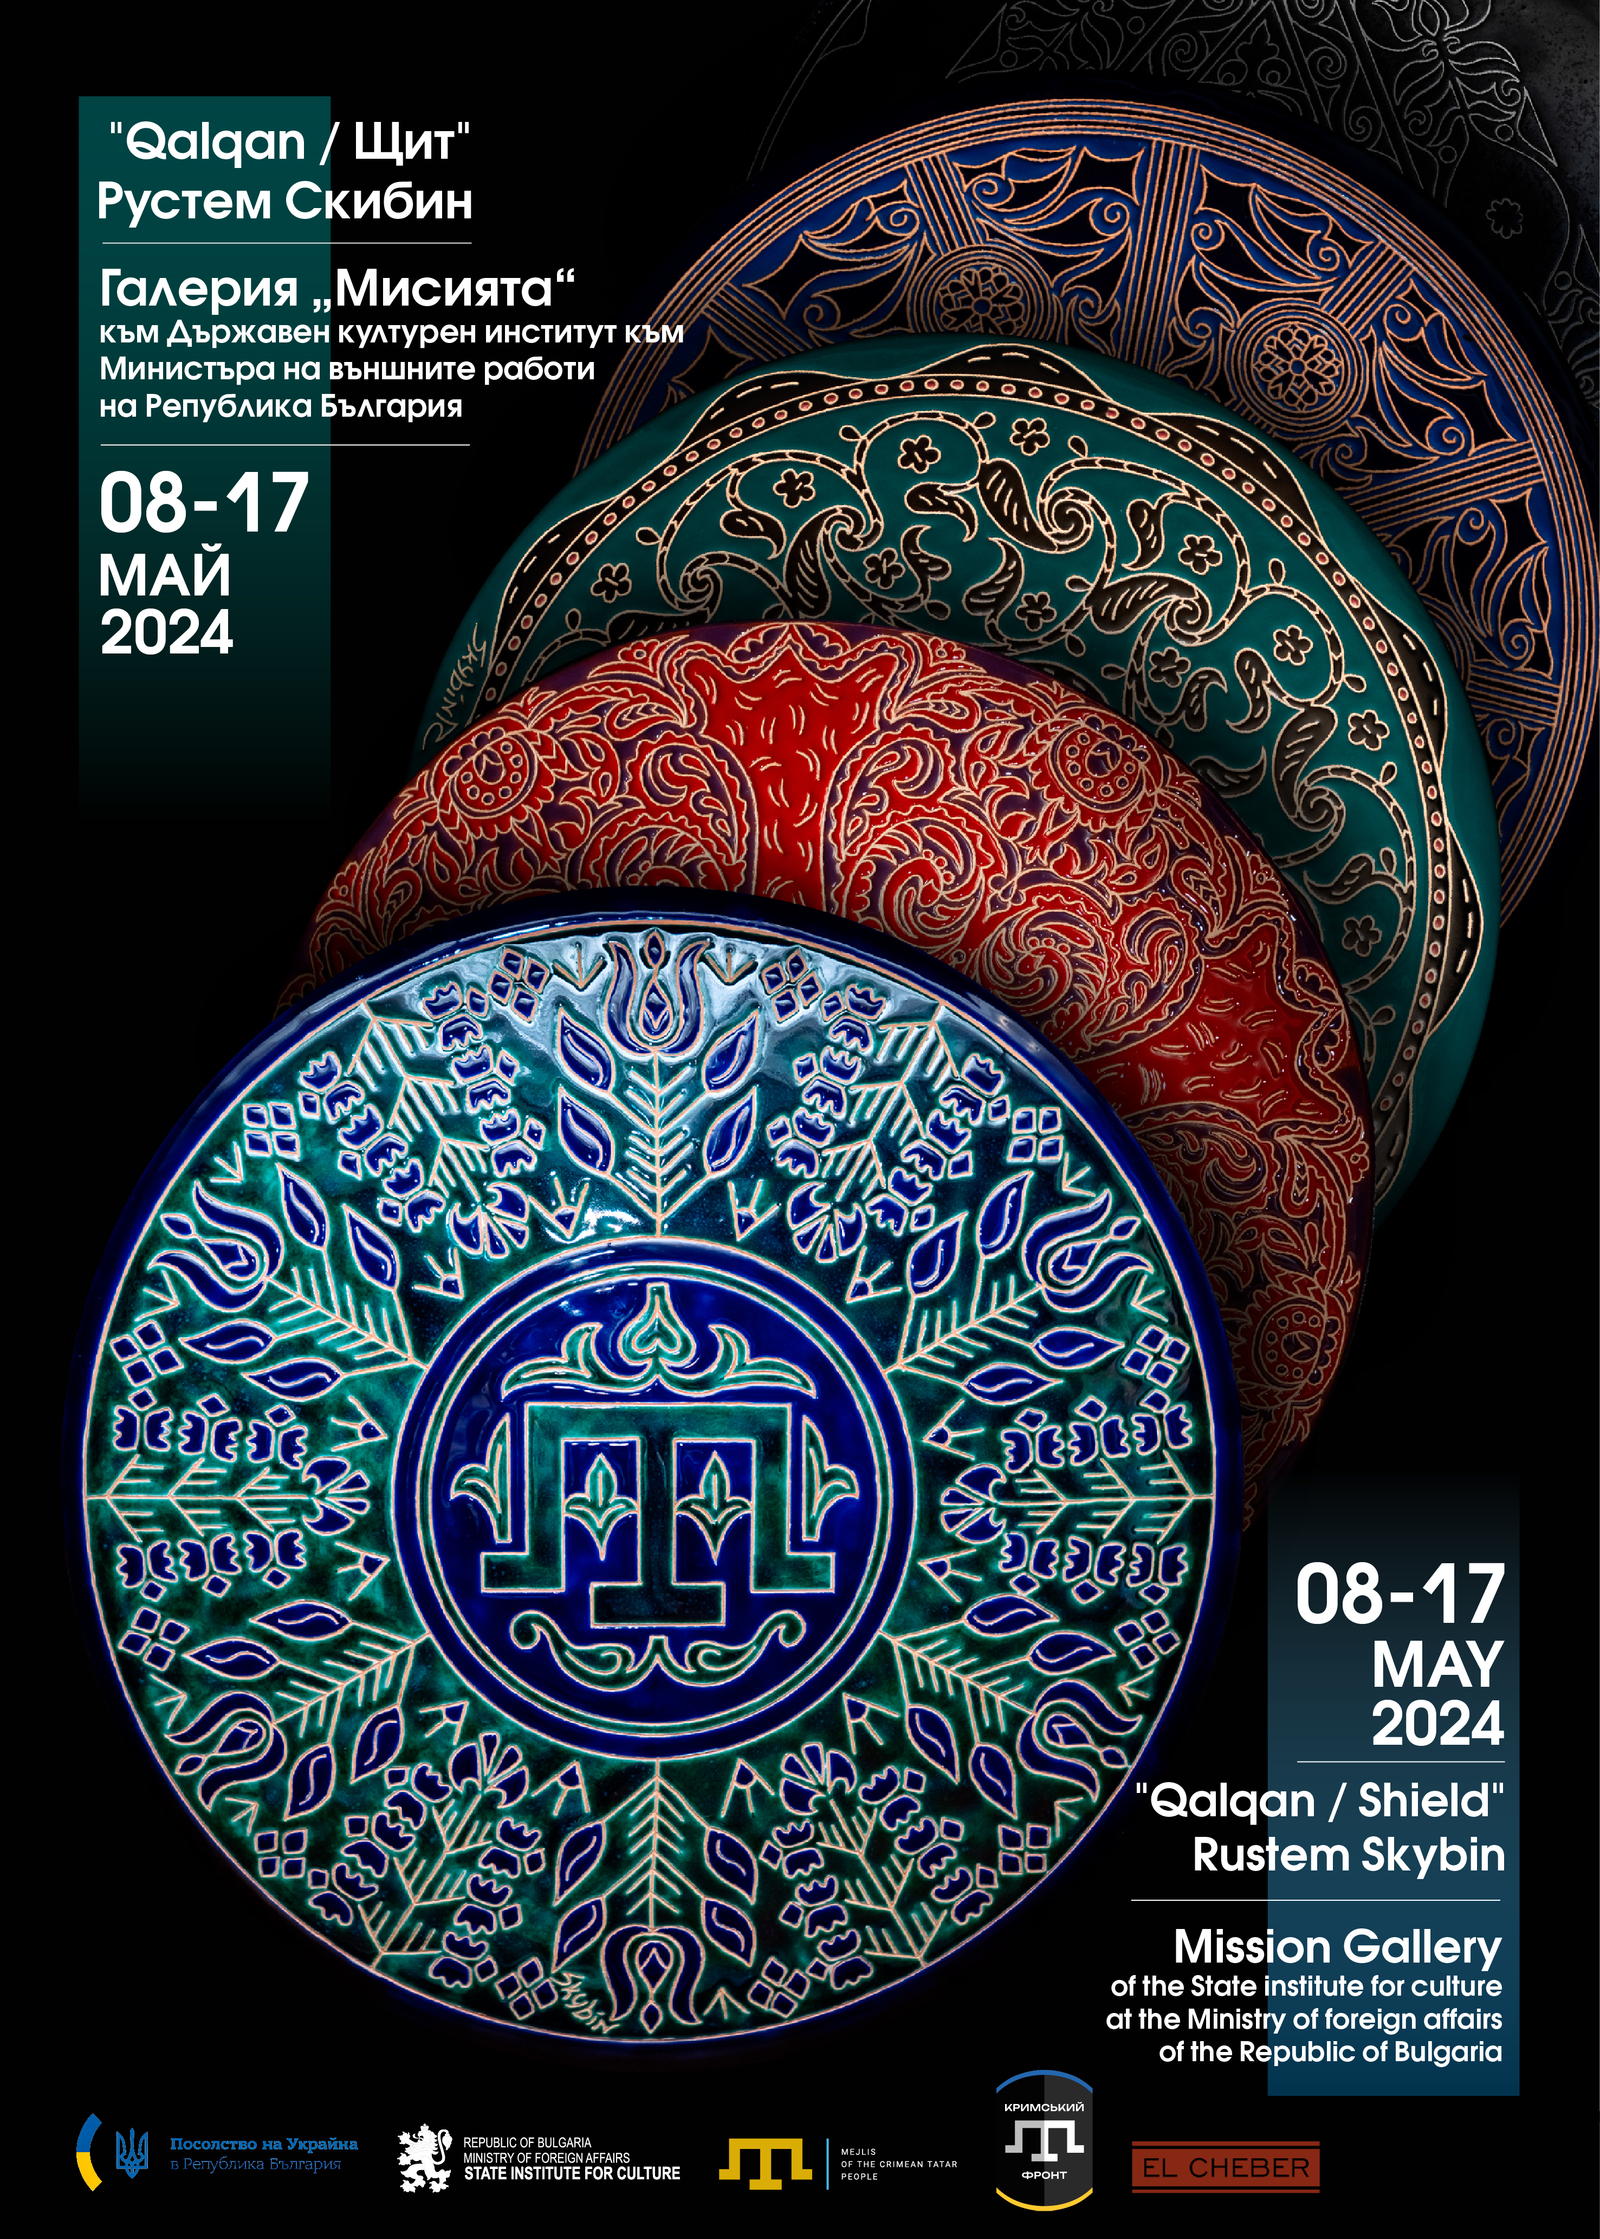 Exhibition of Crimean Tatar ceramics "Qalqan/Shield"